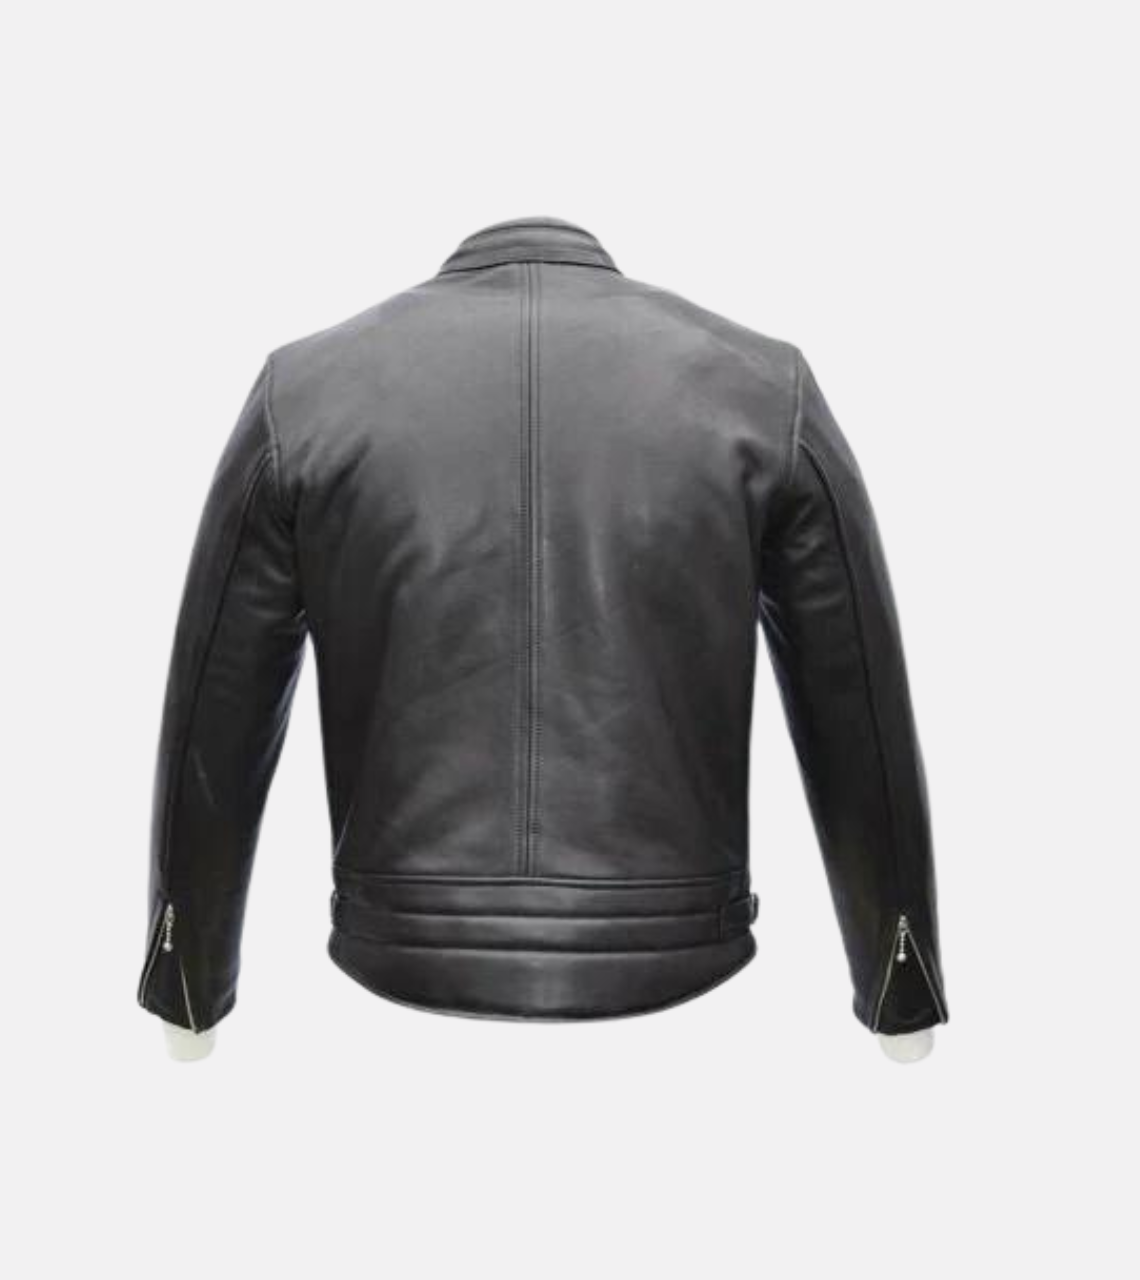 Travor Multi-Lining Men's Biker Leather Jacket